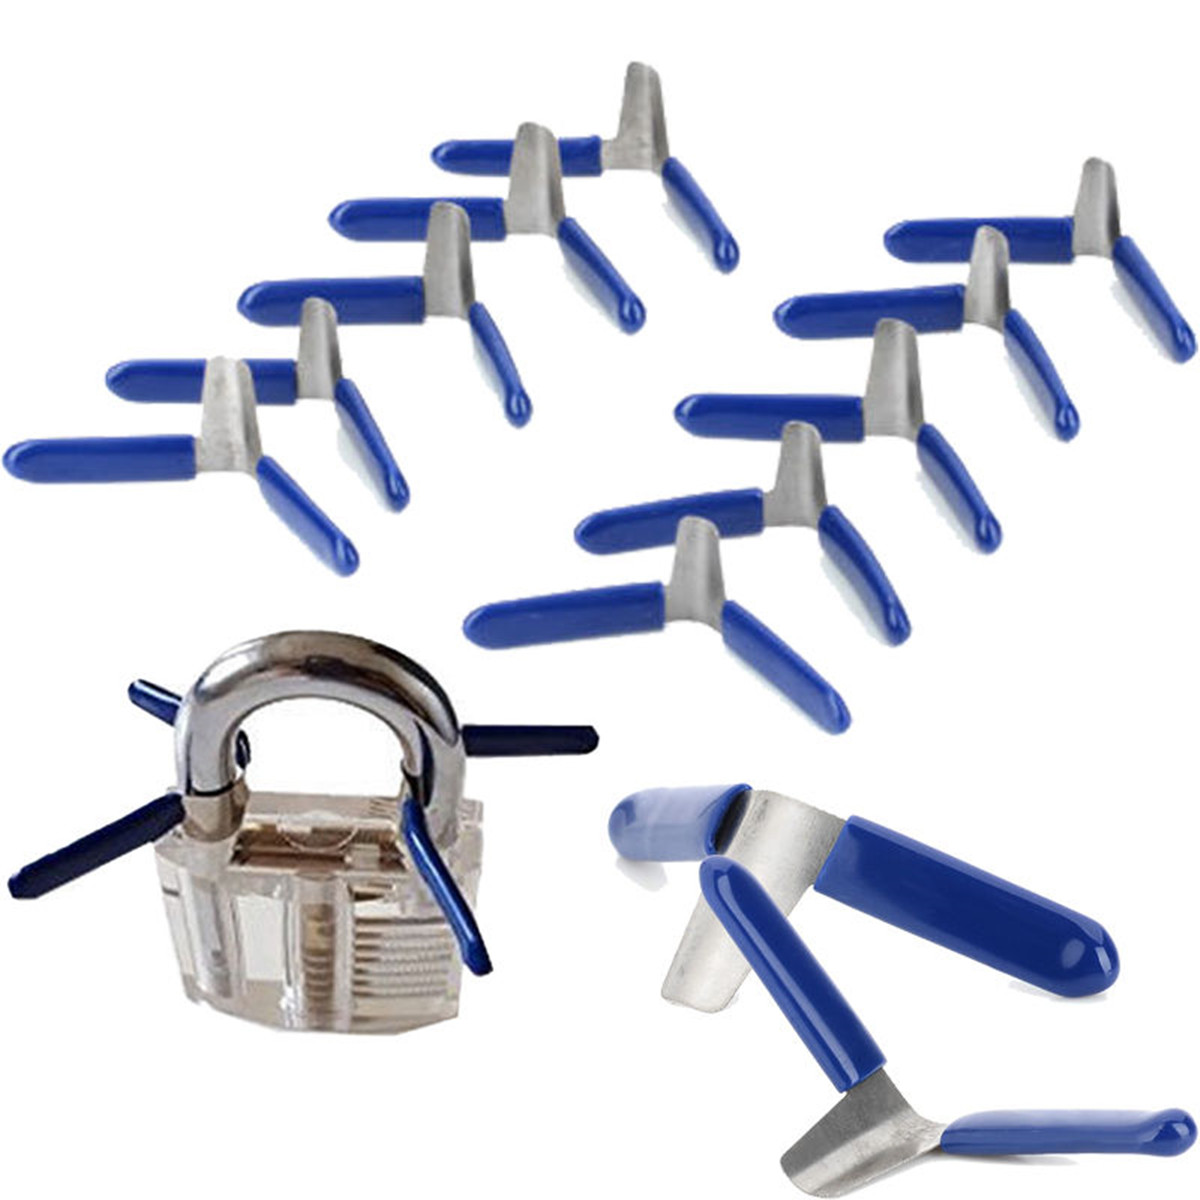 10Pcs-Padlock-Shim-Picks-Set-Lock-Pick-Lockpicking-Opener-Accessories-Tool-Easy-1553056-1